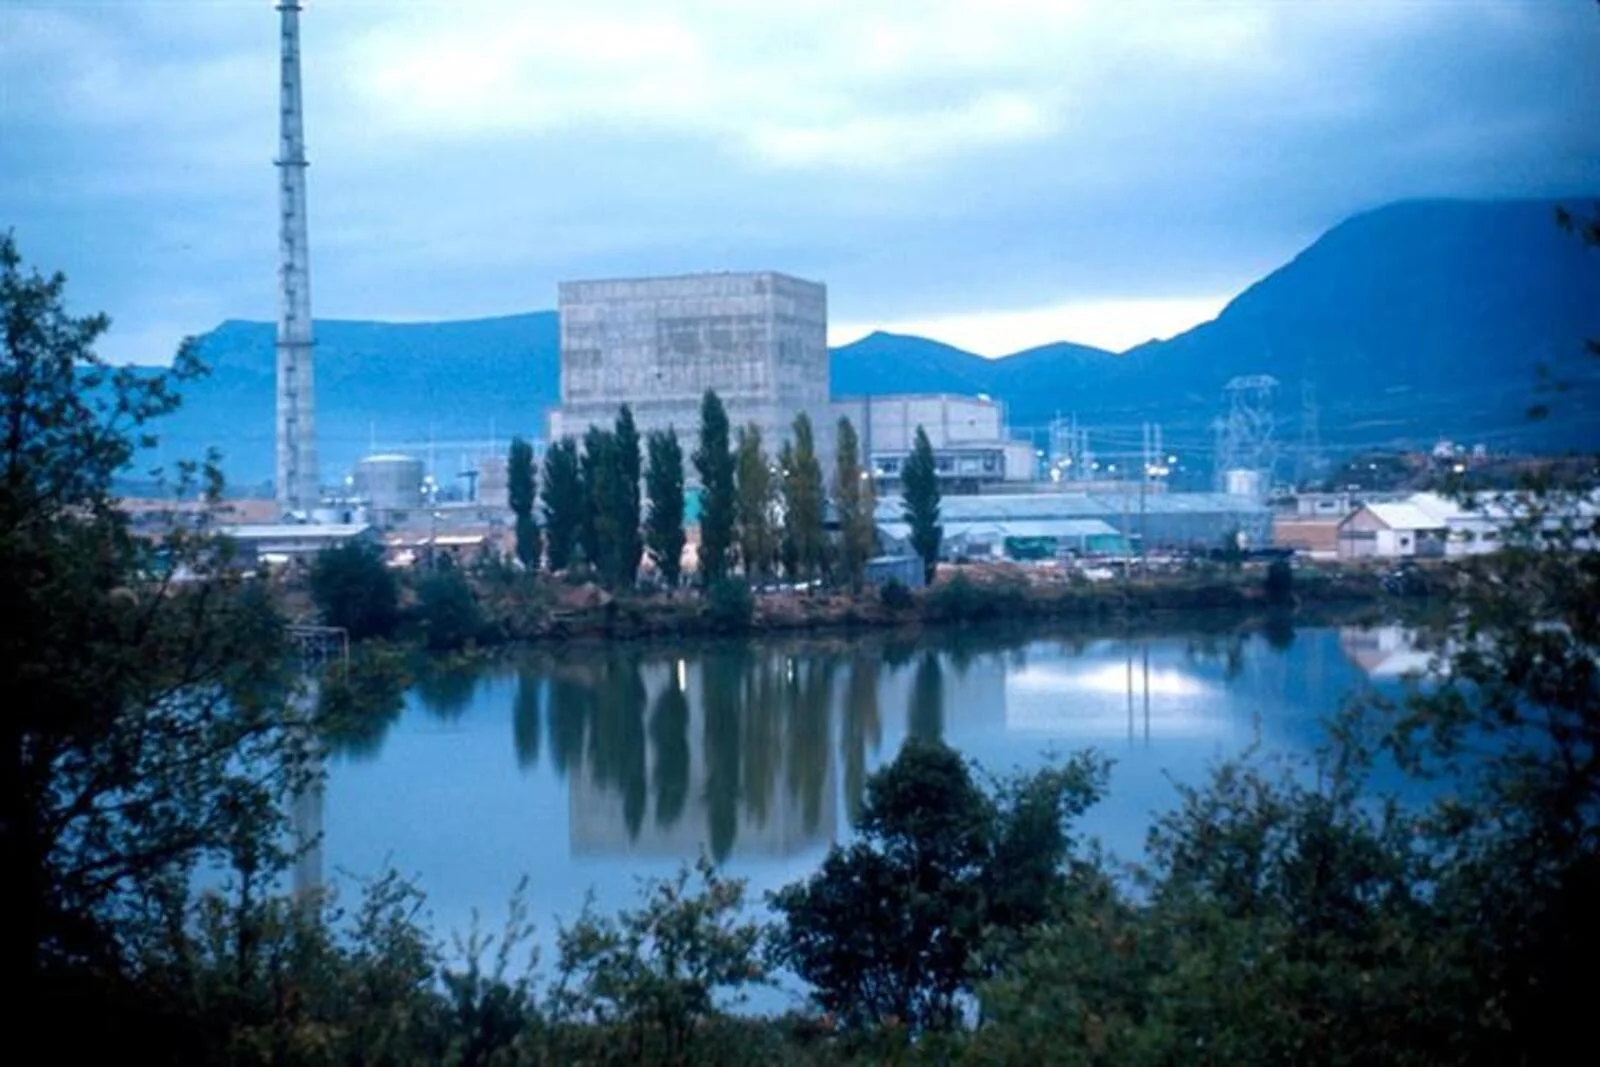 Central Nuclear de Santa María de Garoña. Foto: La Moncloa